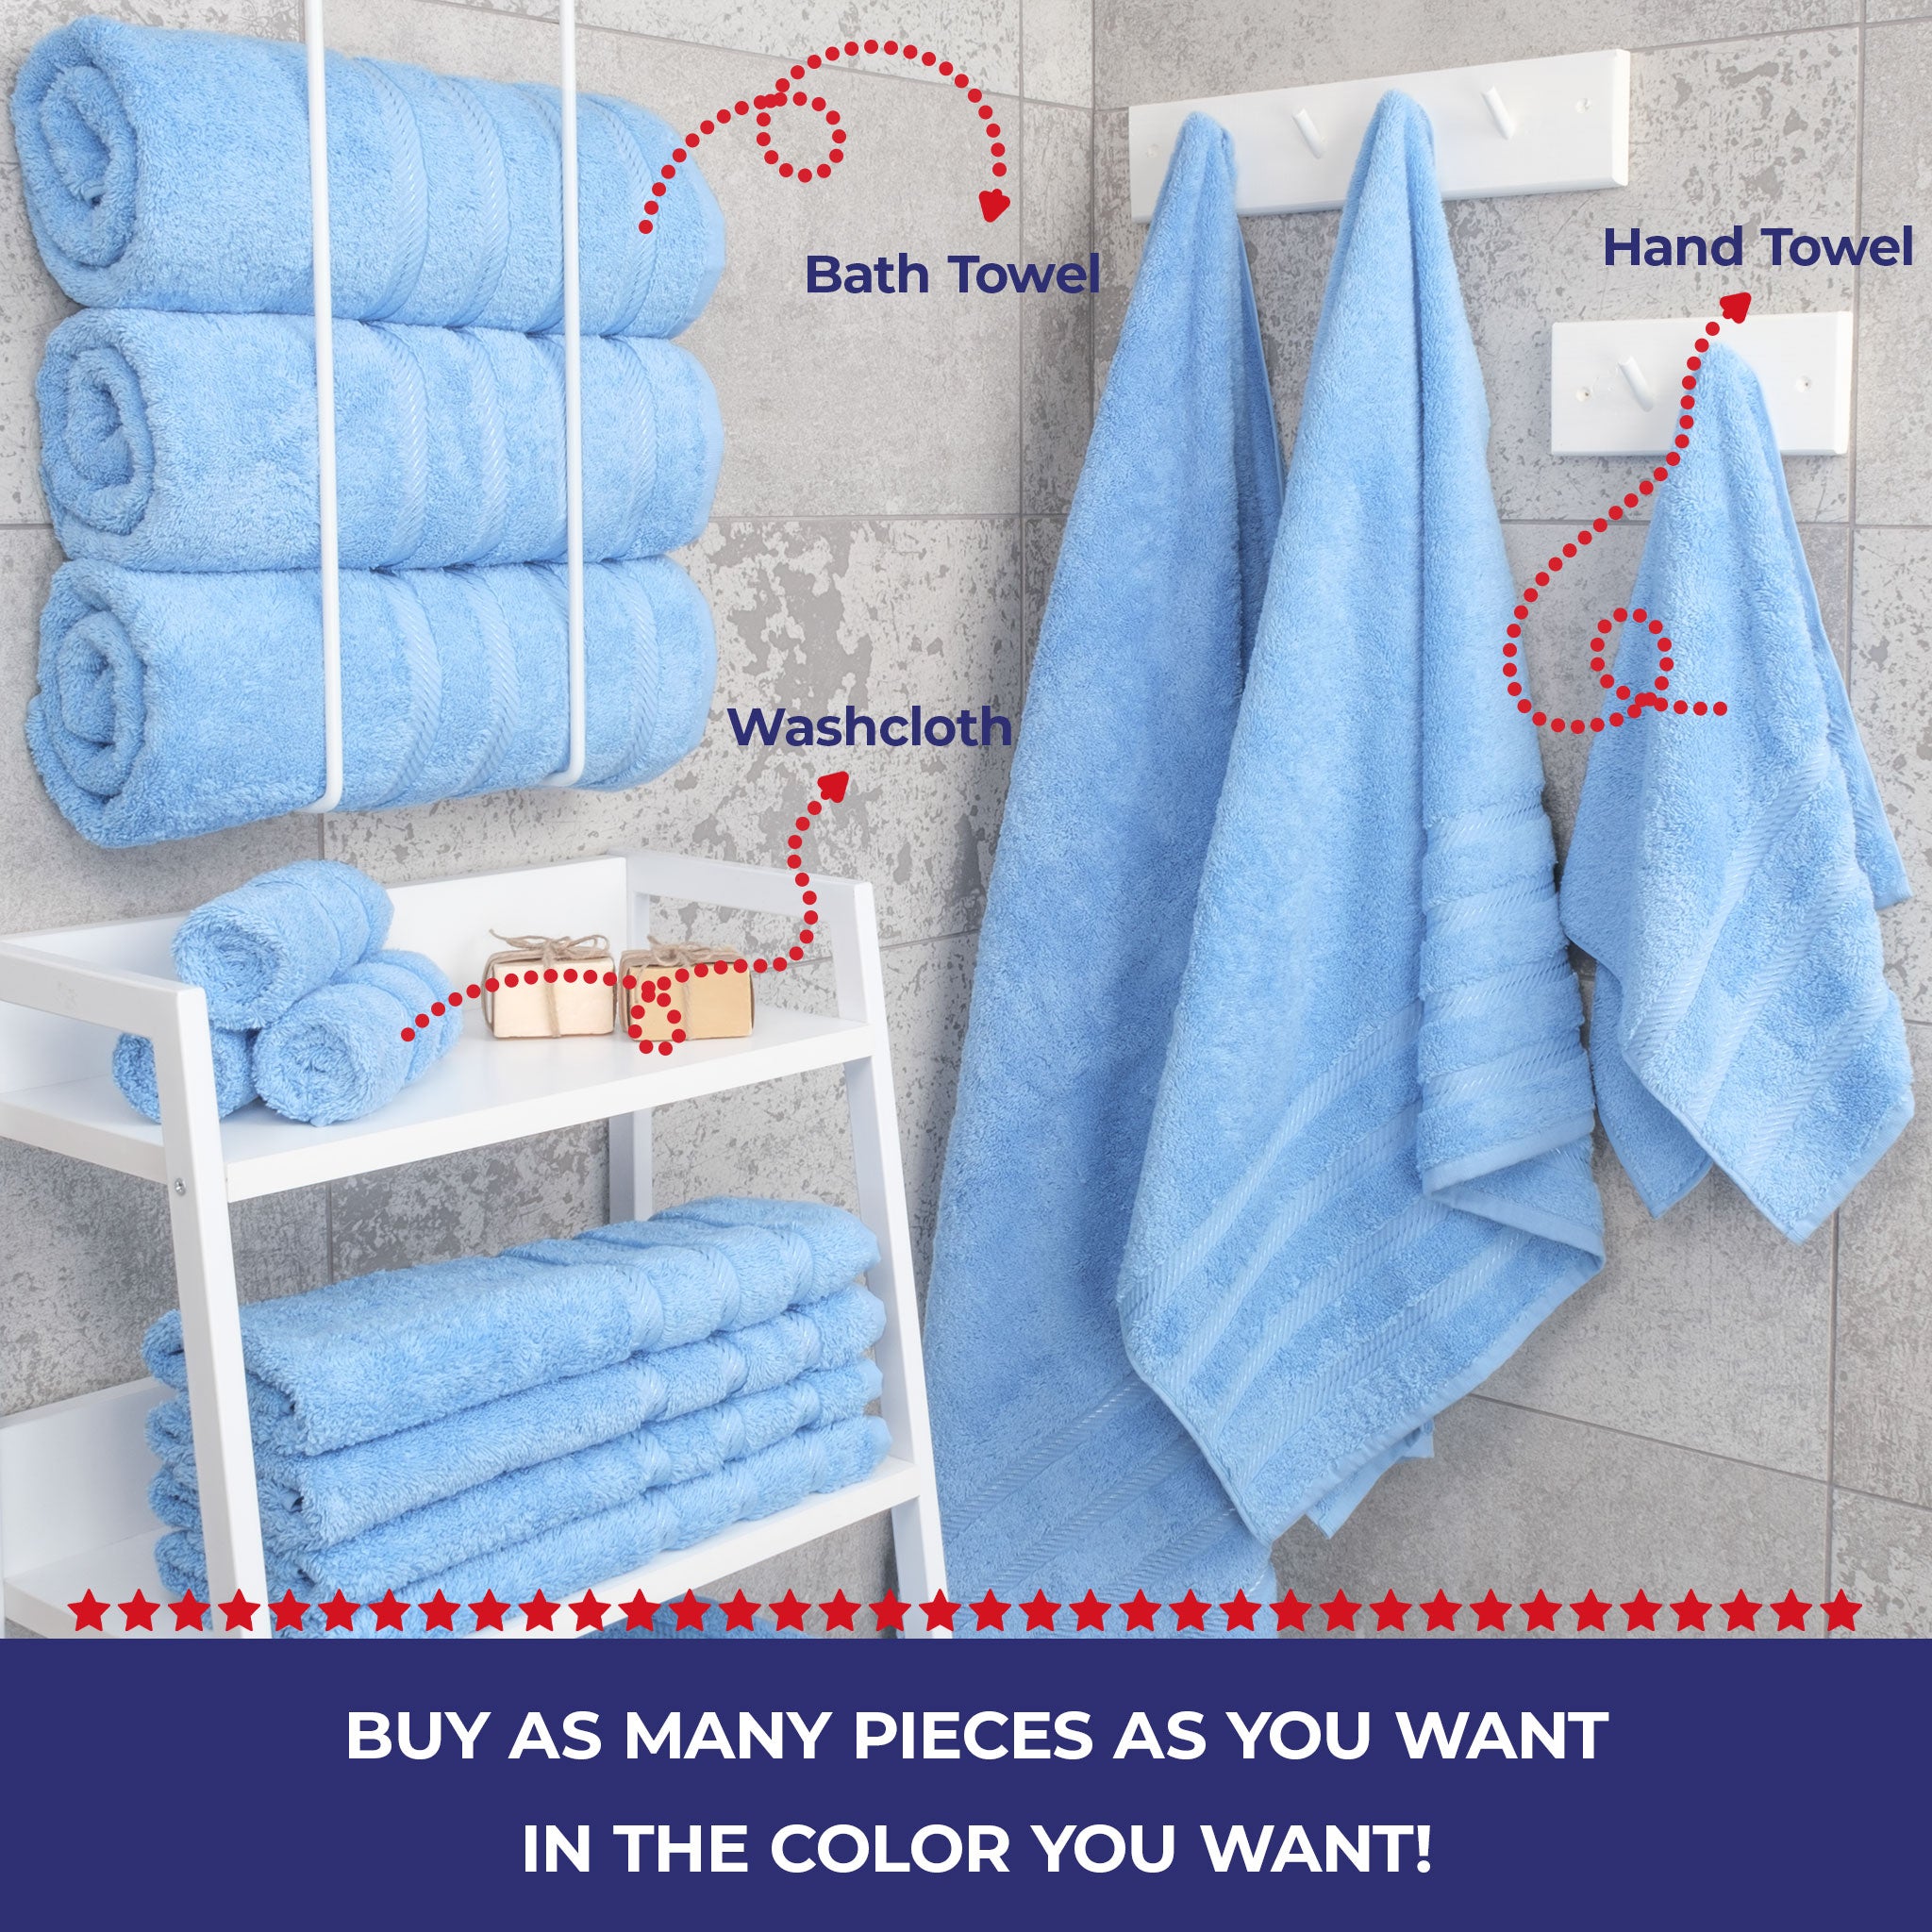 American Soft Linen - Single Piece Turkish Cotton Bath Towels - Sky-Blue - 4